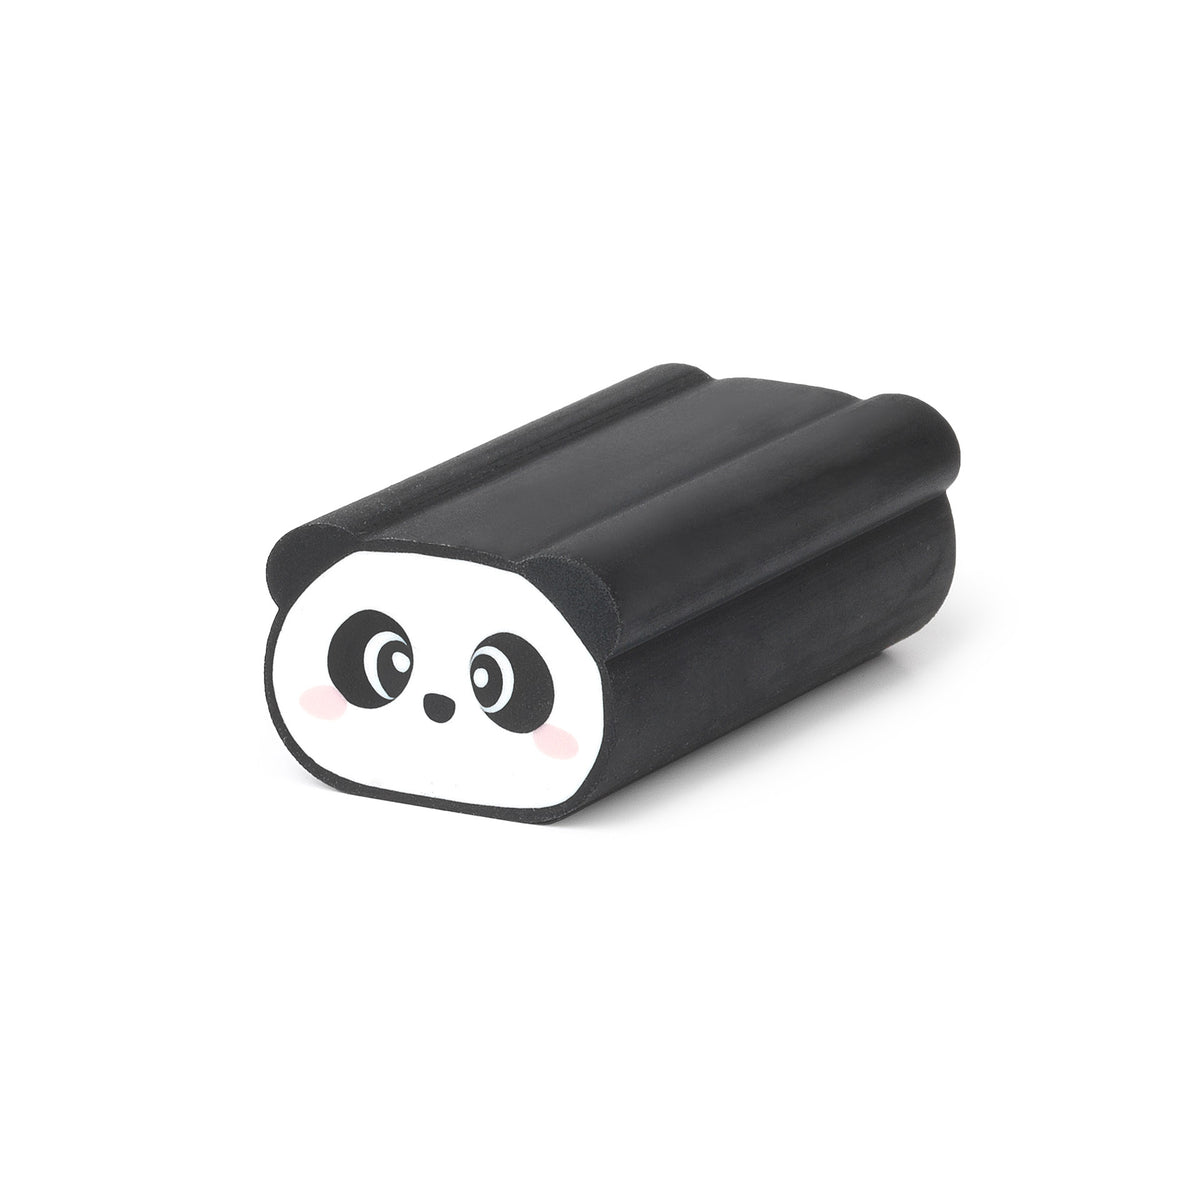 An eraser in the shape of a panda&#39;s head.